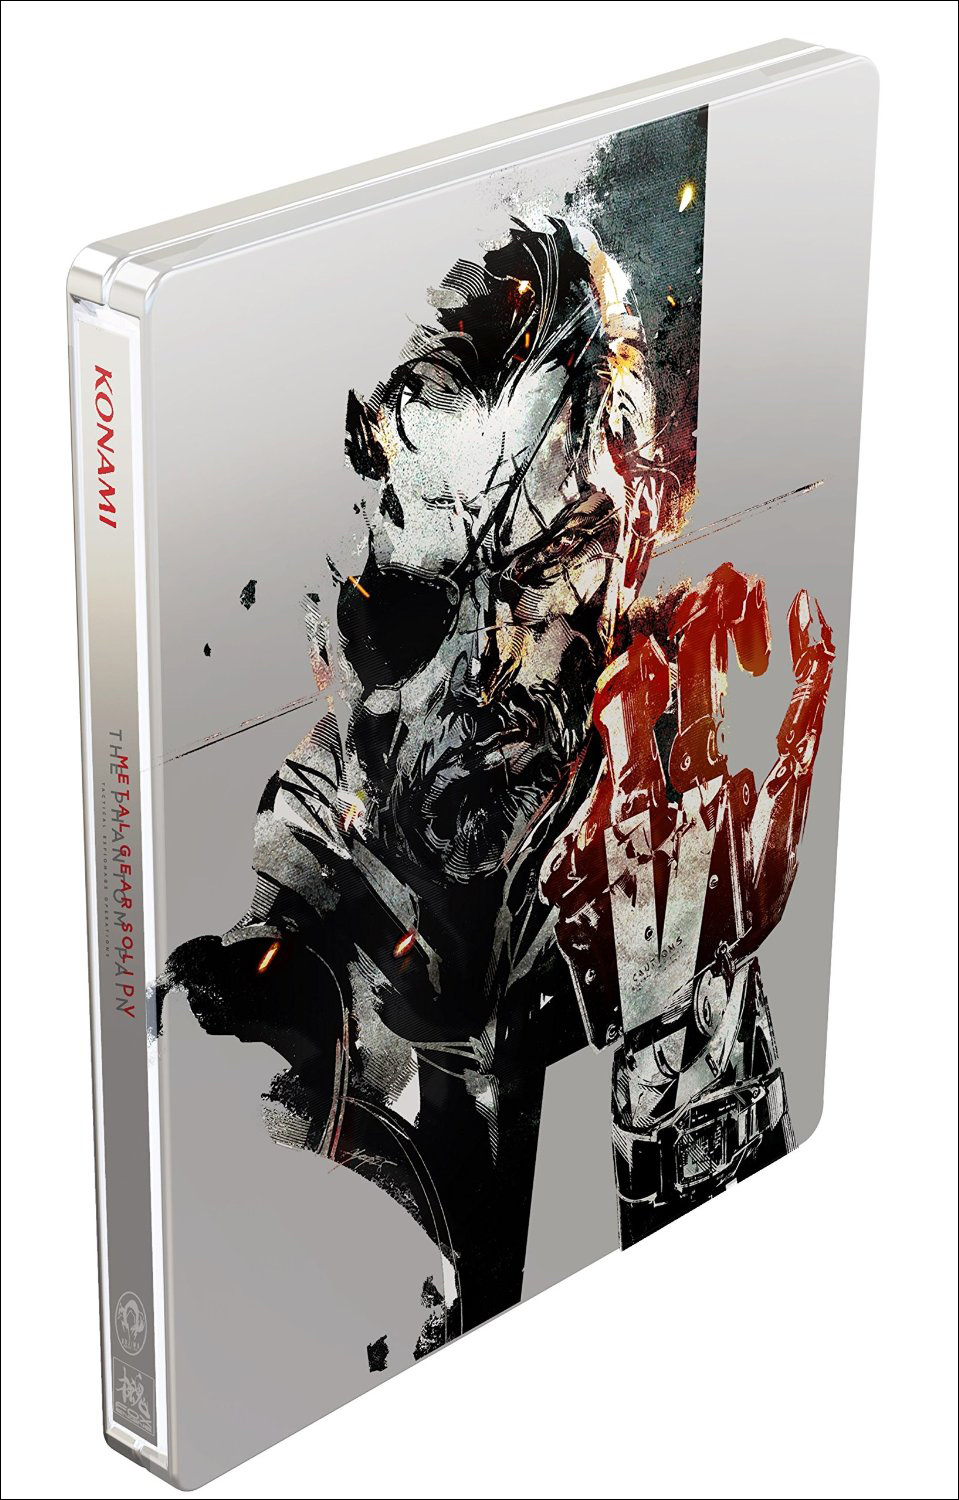 Metal-Gear-Solid-V-The-Phantom-Pain-Steelbook-Shinkawa.jpg